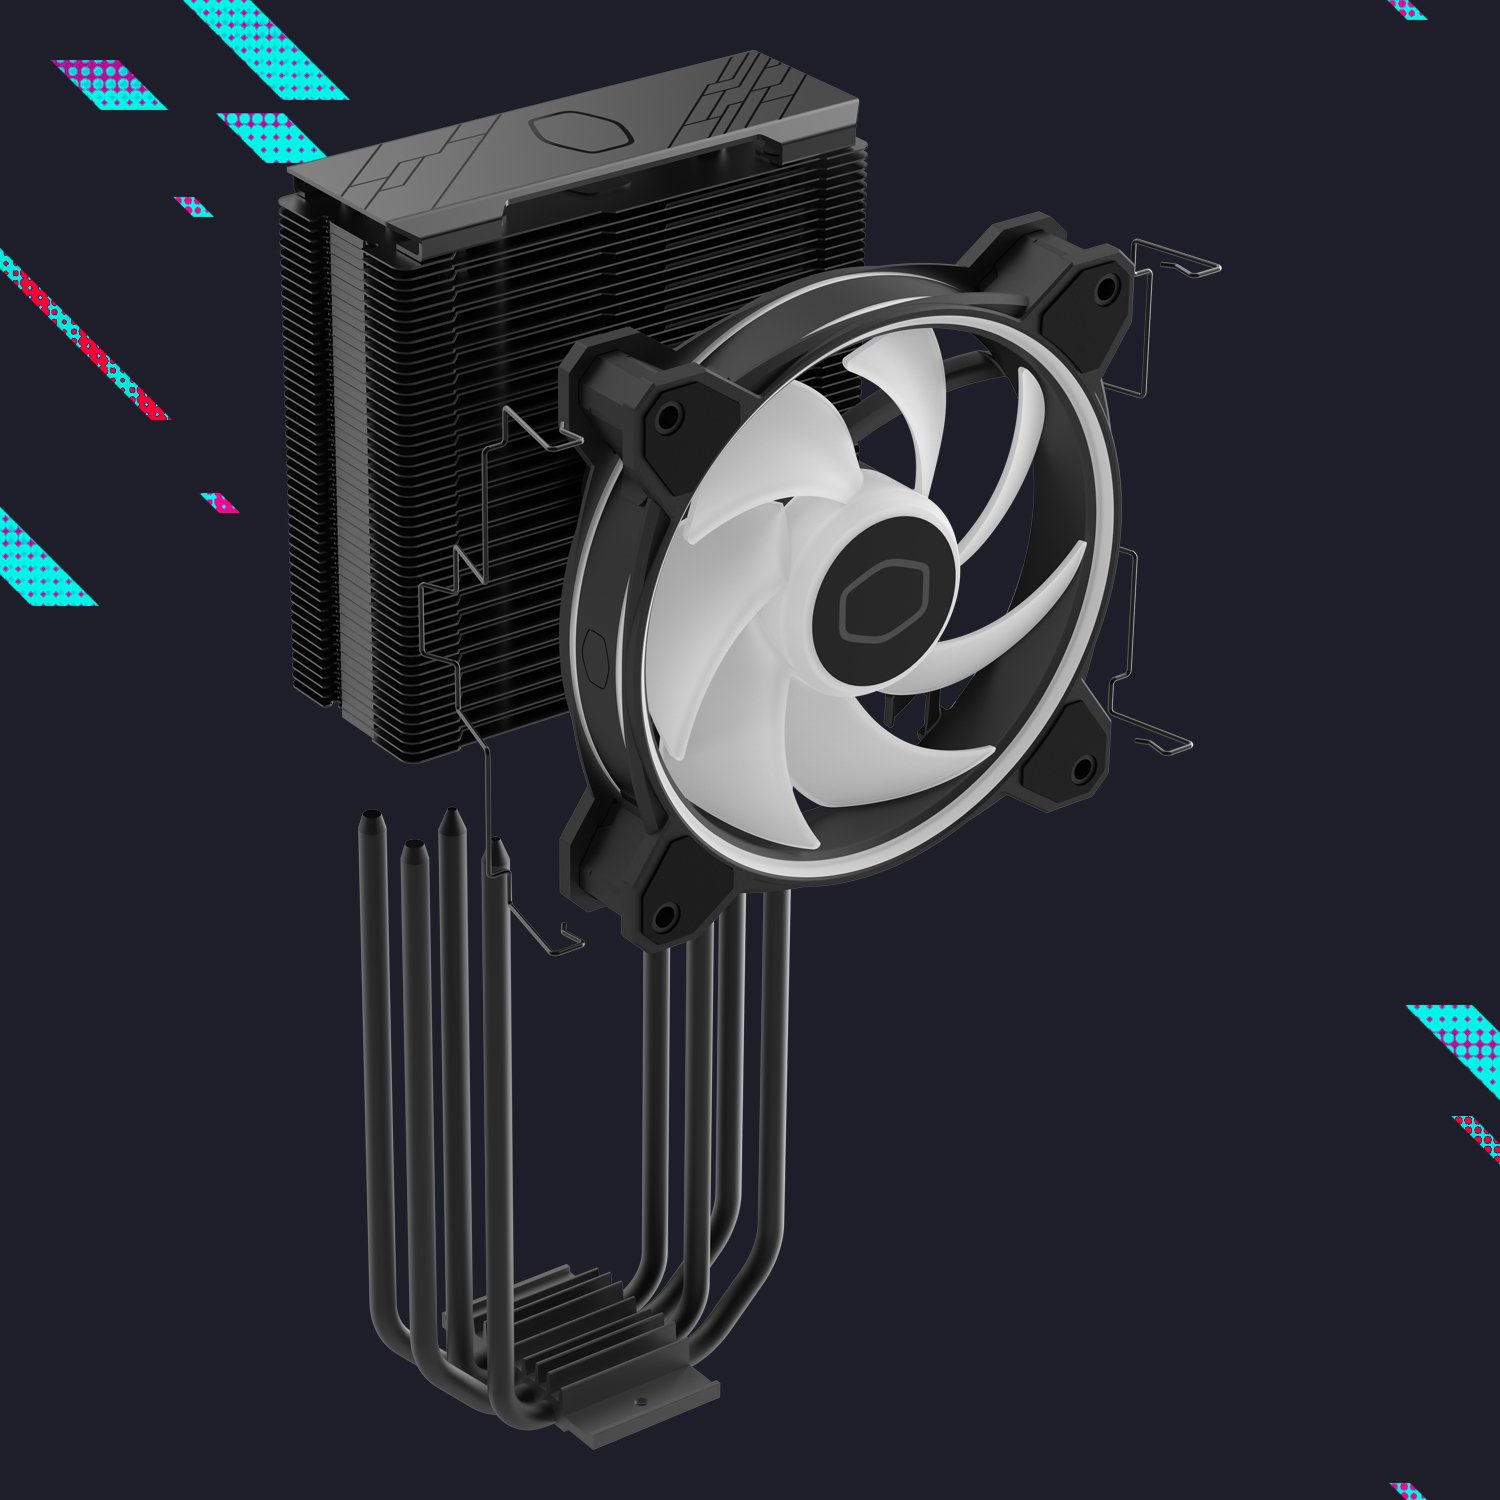 Cooler Master Hyper 212 Halo Black CPU Air Cooler